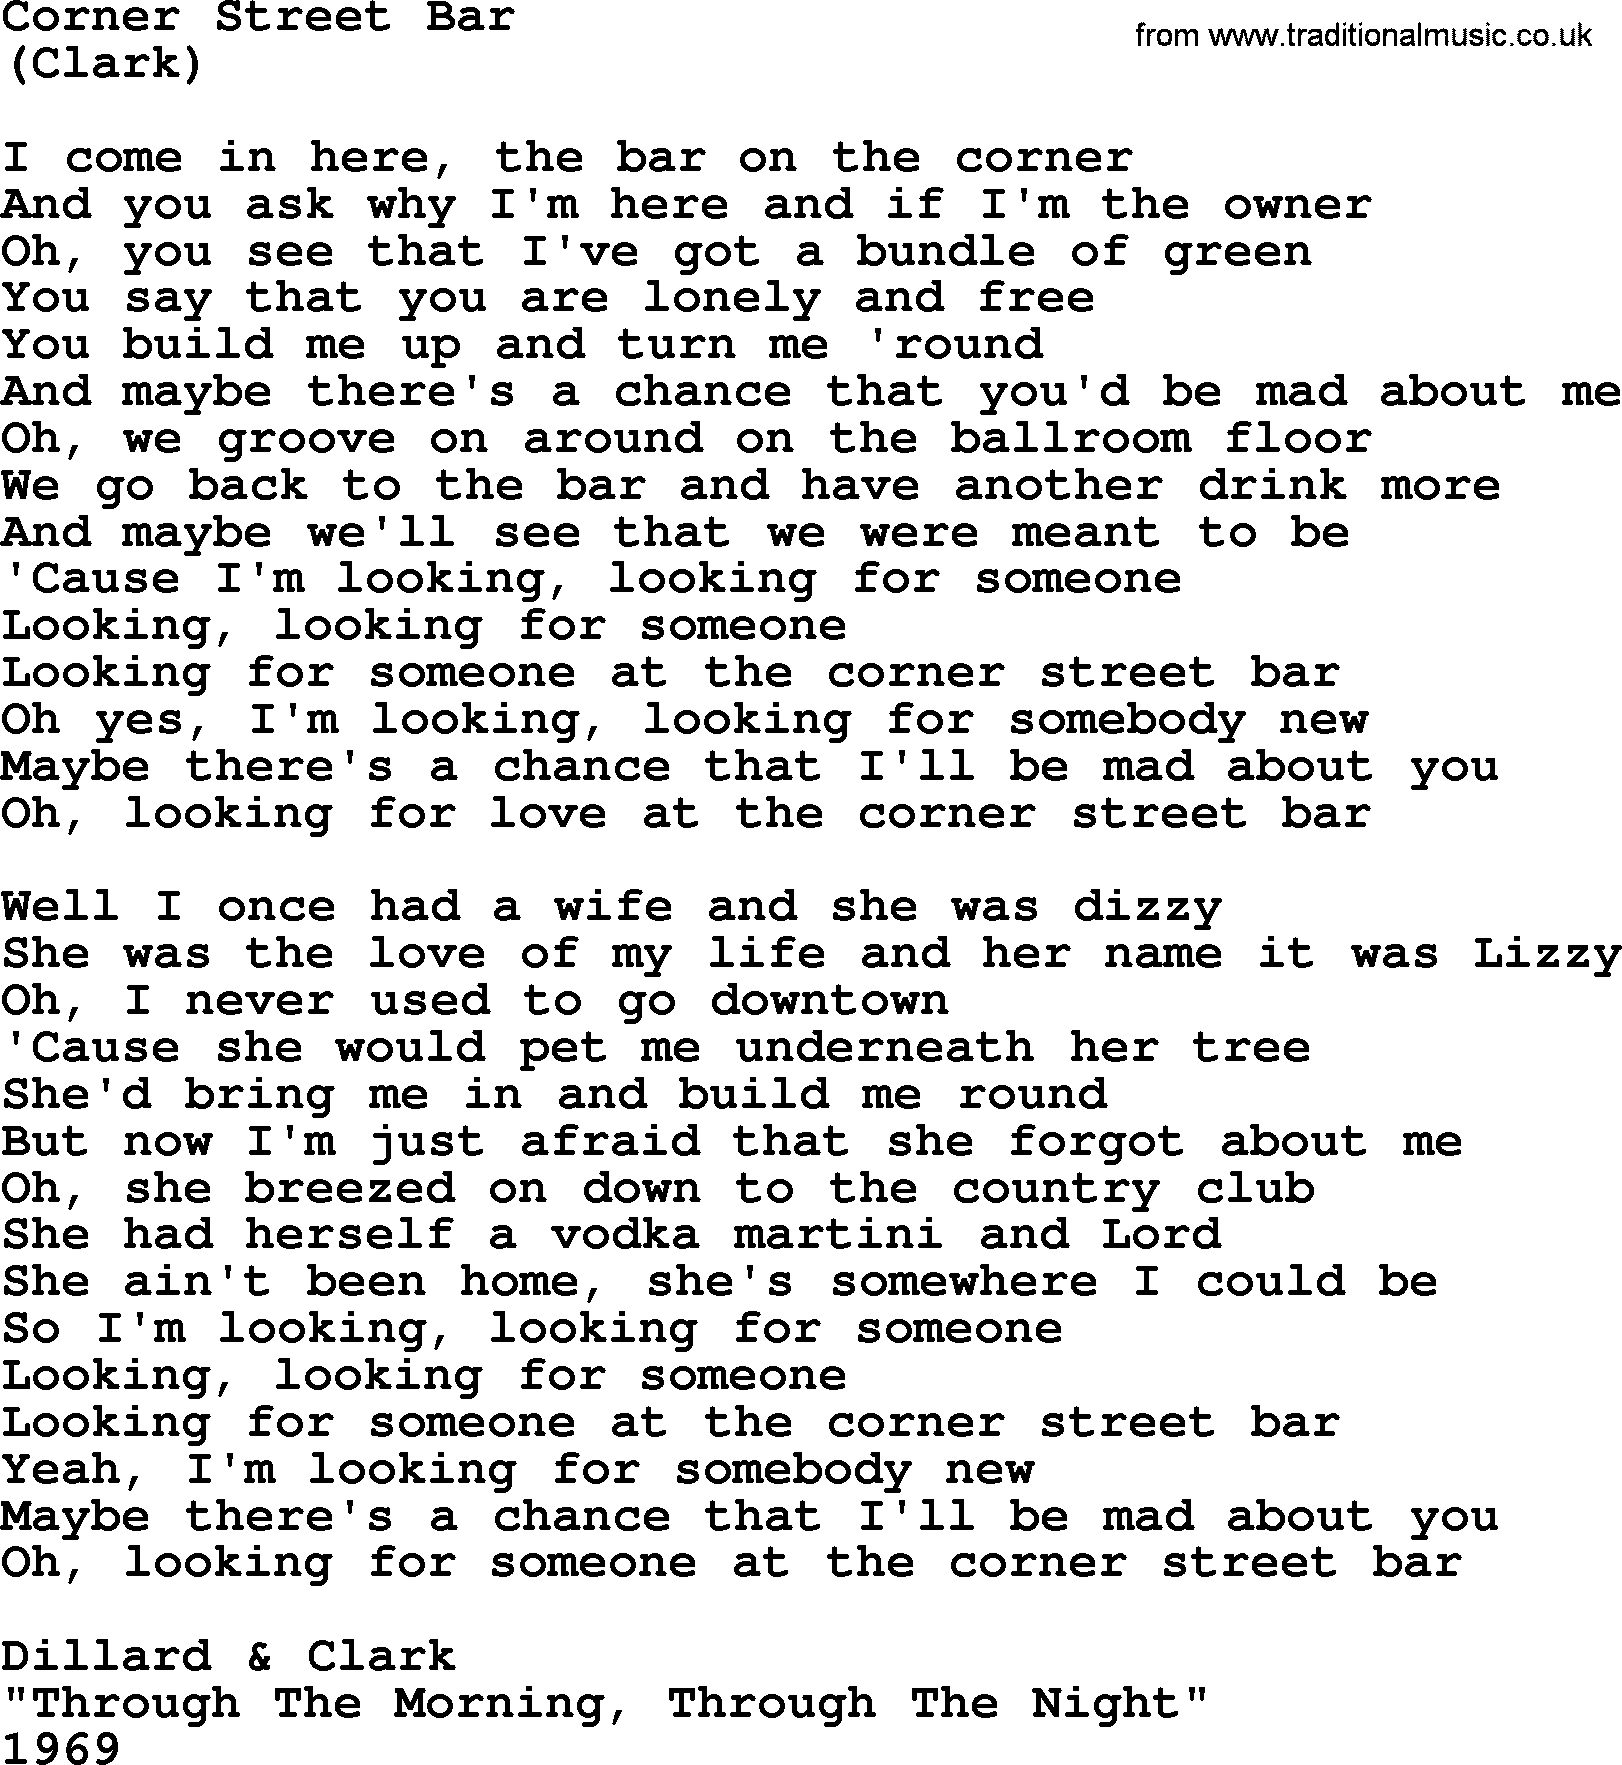 The Byrds song Corner Street Bar, lyrics